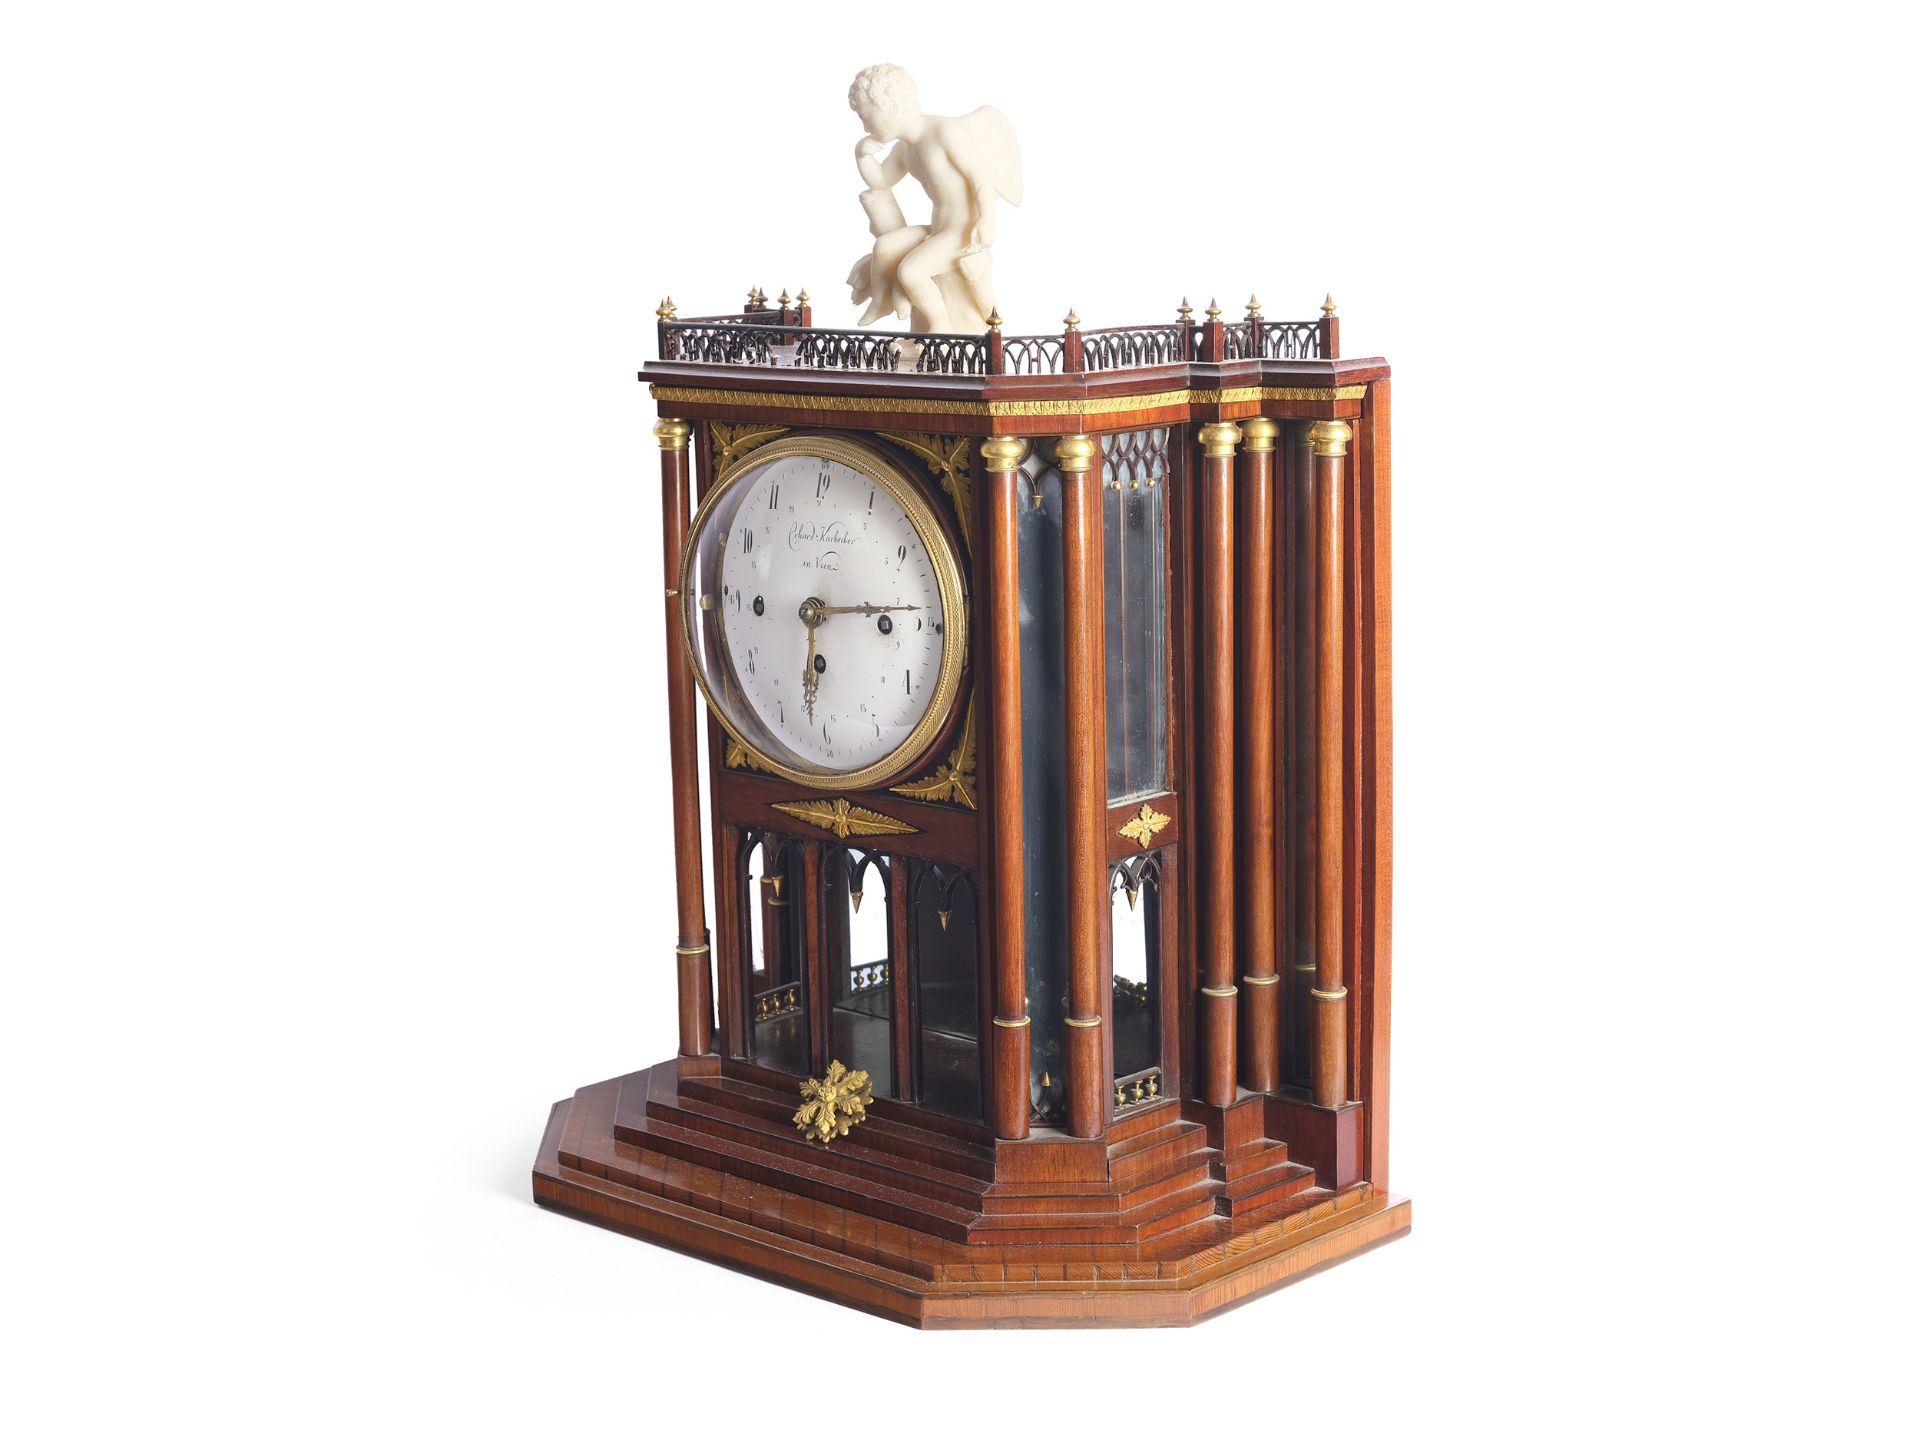 Elegant commode clock, Erhard Karbacher Vienna, around 1800 - Image 2 of 6